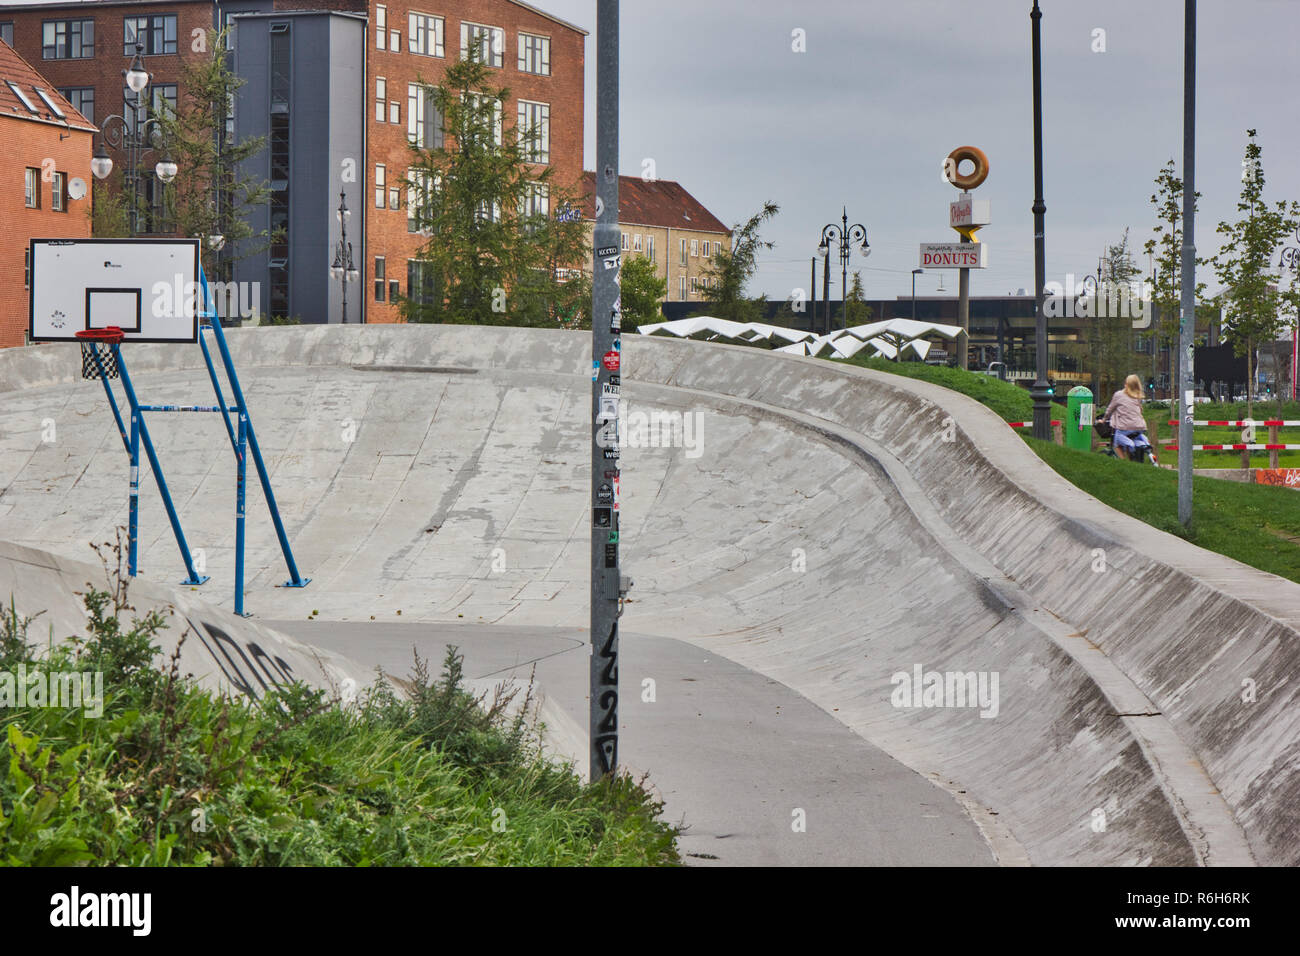 Basketball court, Superkilen public park, Norrebro, Copenhagen, Denmark, Stock Photo - Alamy